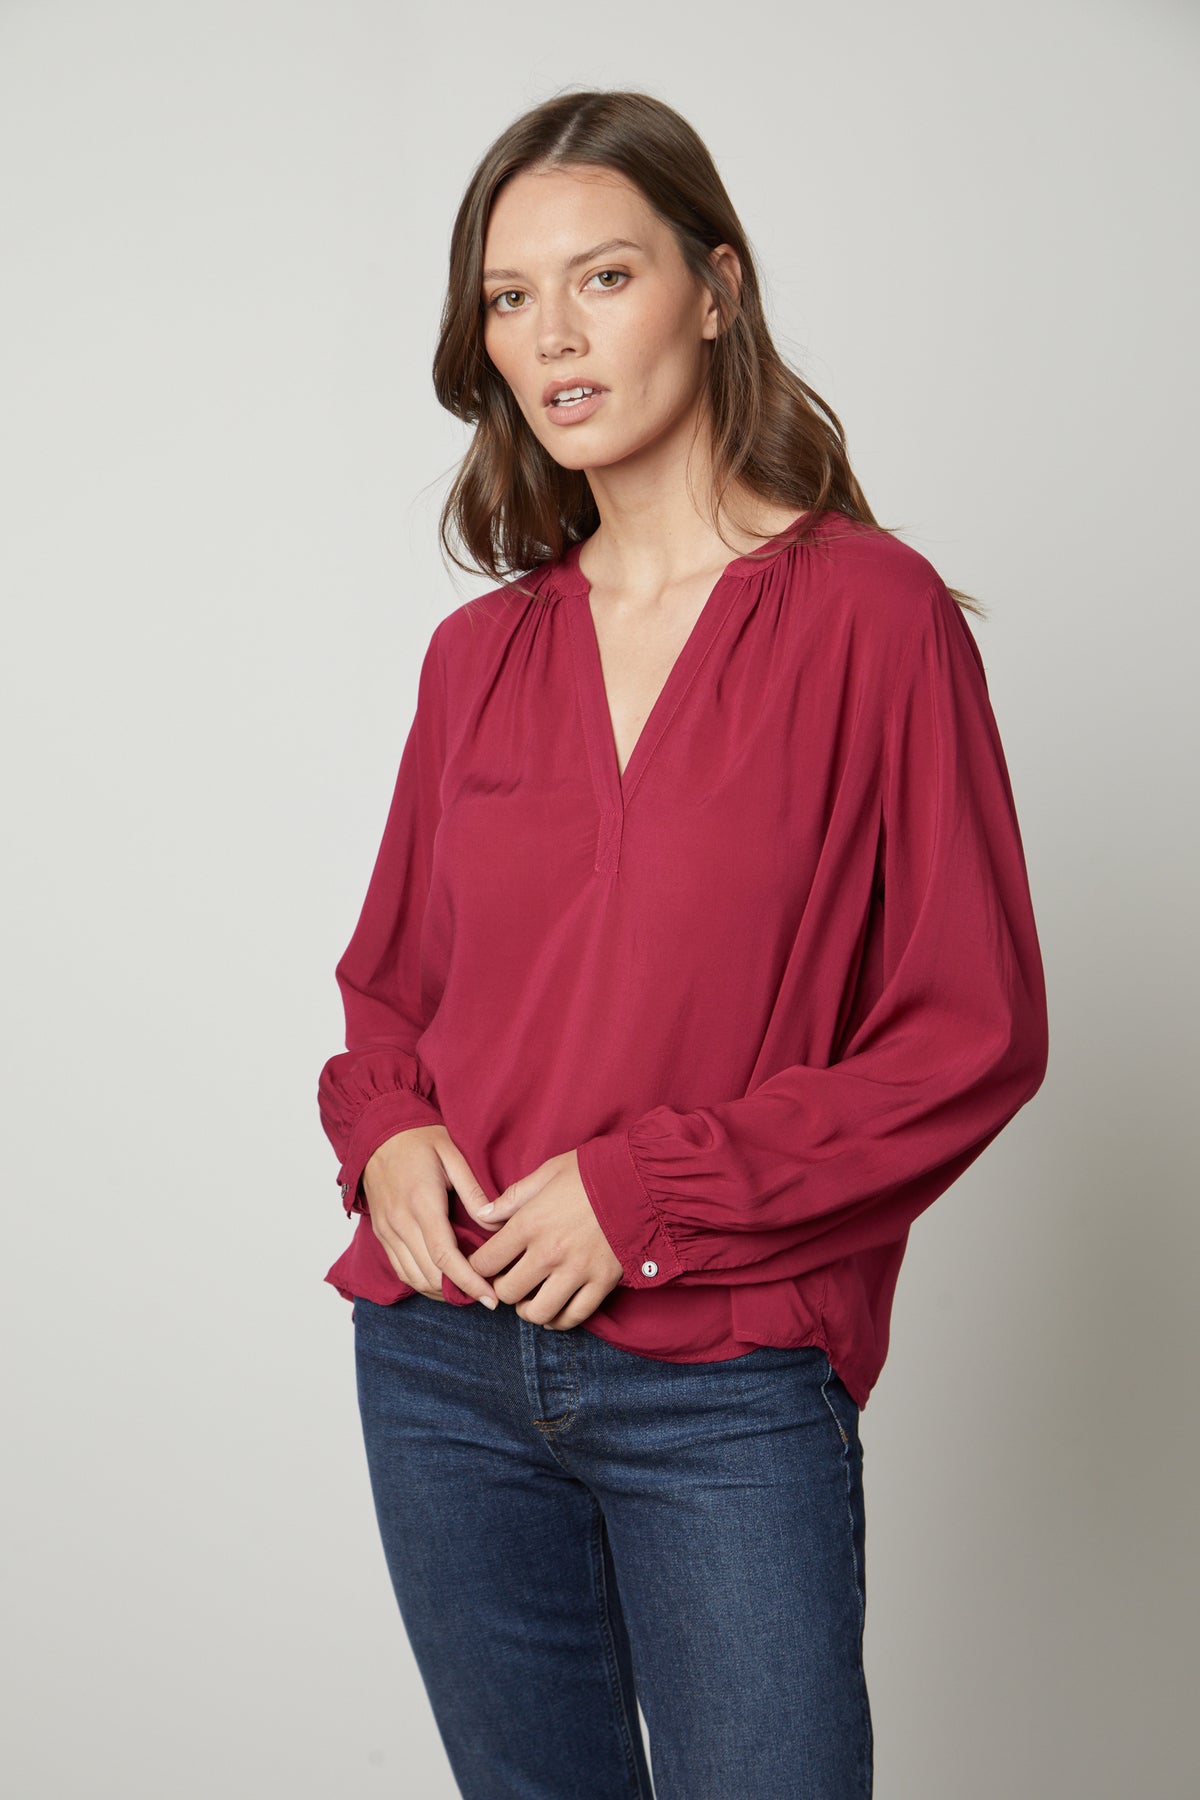 A model wearing a Velvet by Graham & Spencer POSIE SPLIT NECK BLOUSE and jeans.-26861471137985